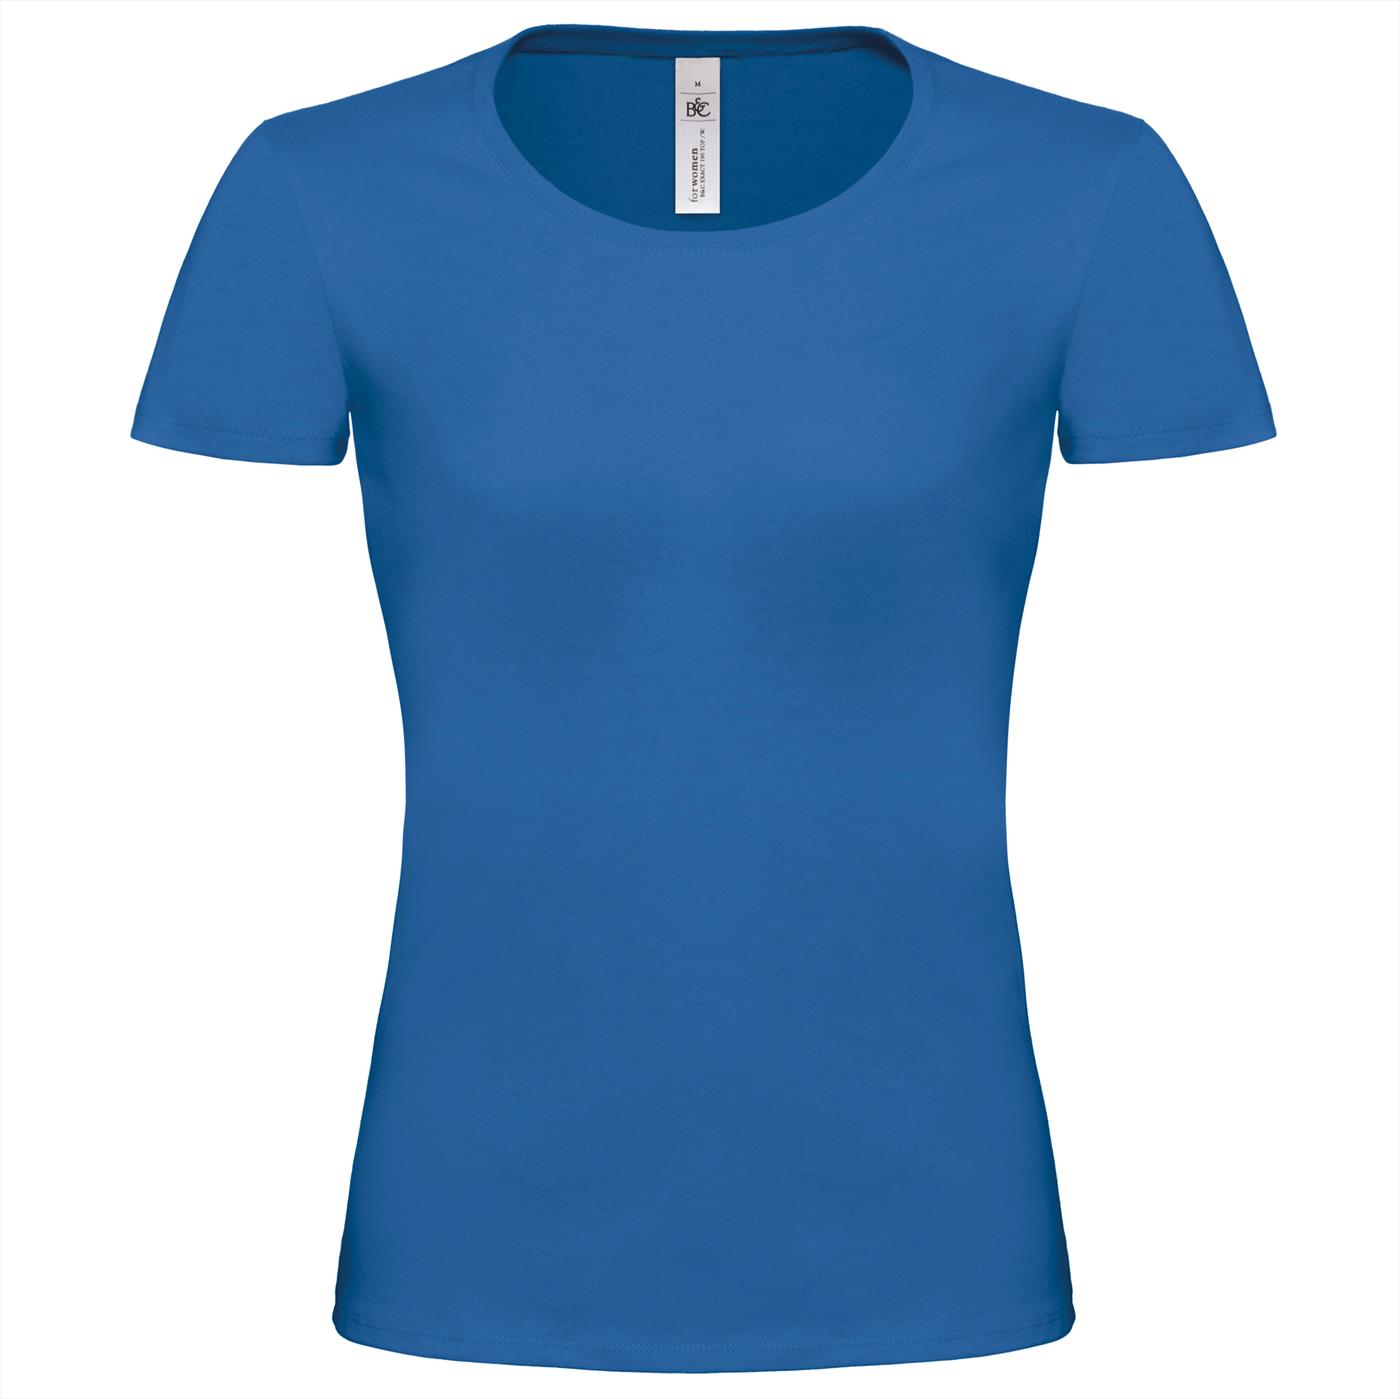 B&C Collection Women's Exact 190 Short Sleeve T-Shirt BA191